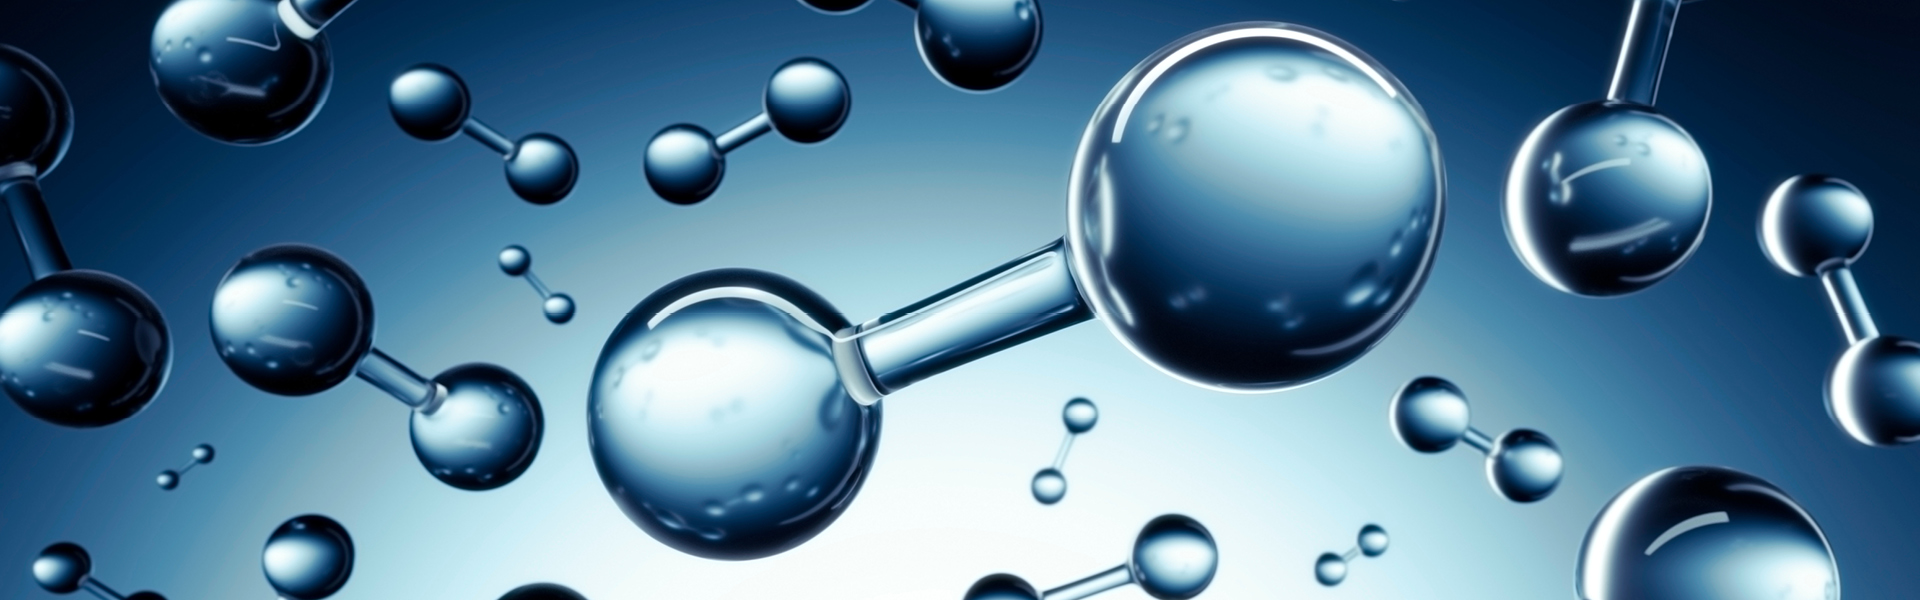 Hydrogen energy molecules - Clean future energy concept